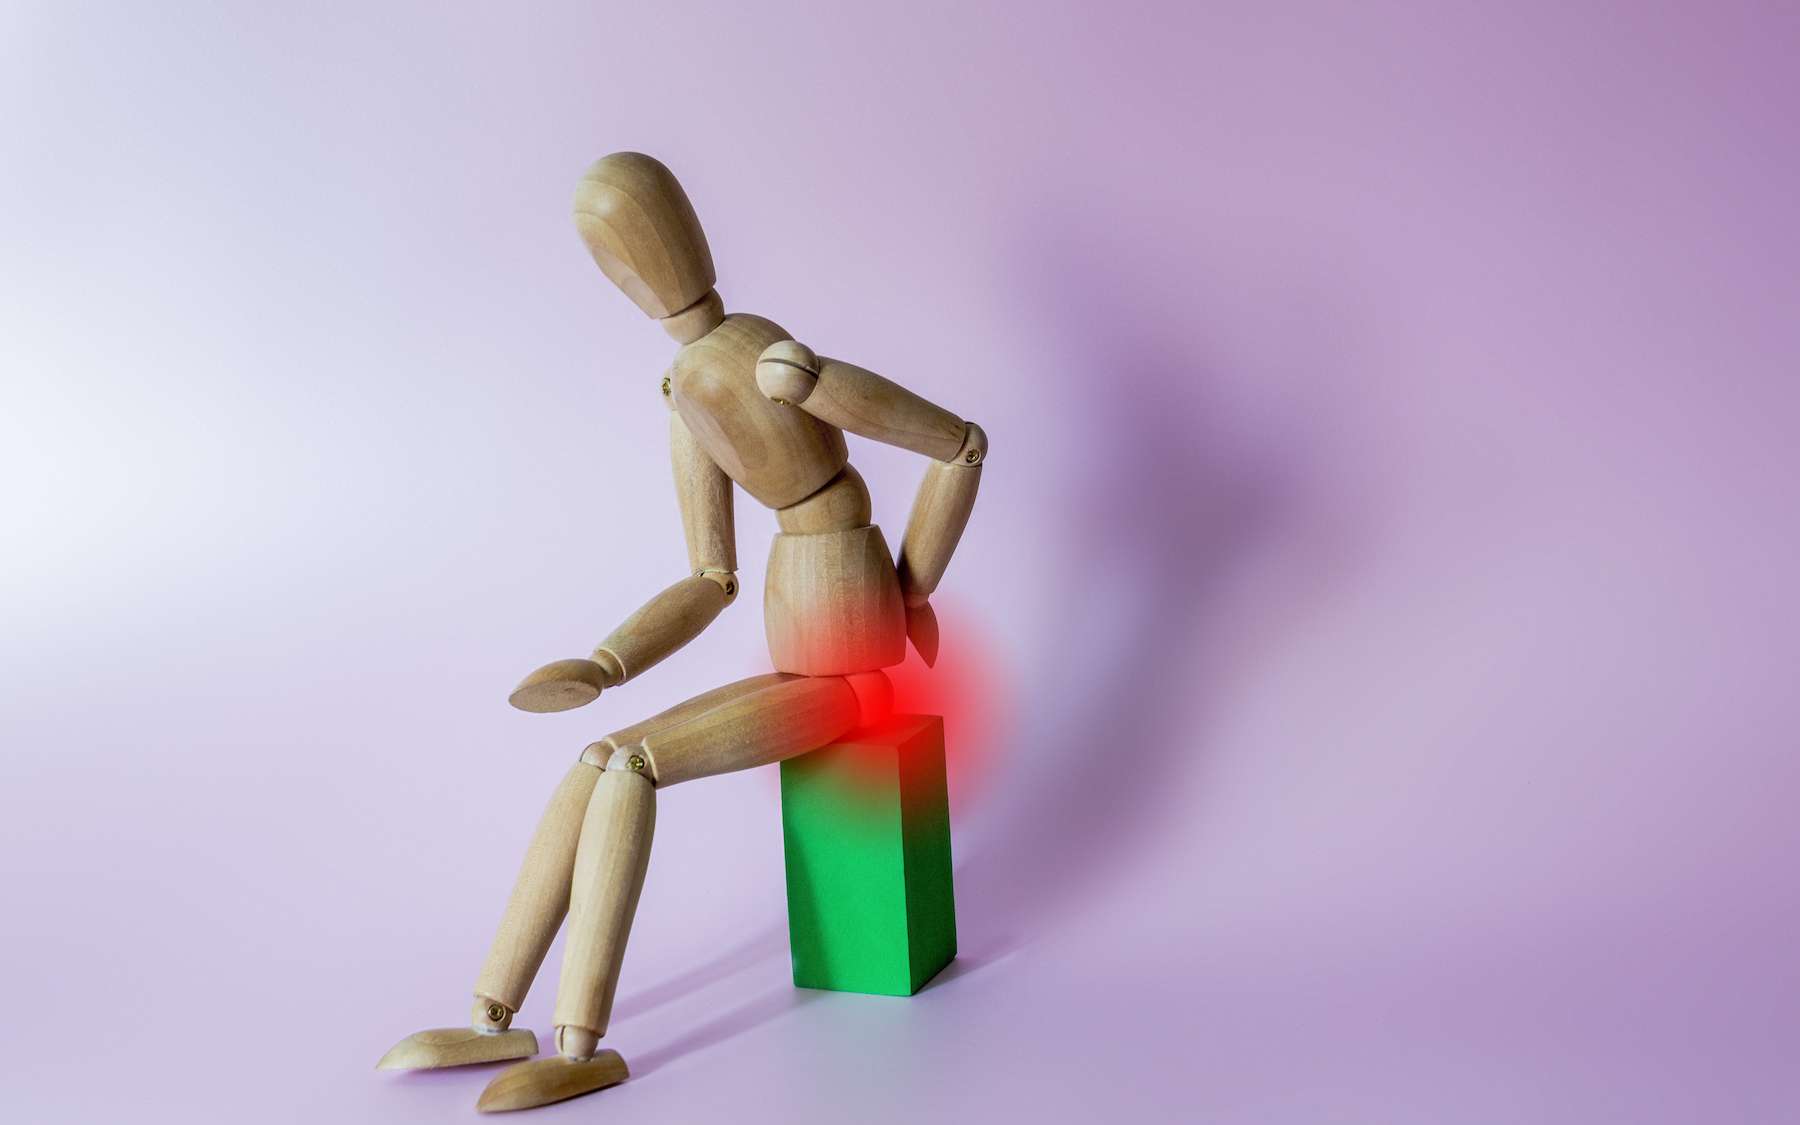 Le syndrome anal sans repos est une variante du syndrome des jambes sans repos. © Alrandir, Adobe Stock